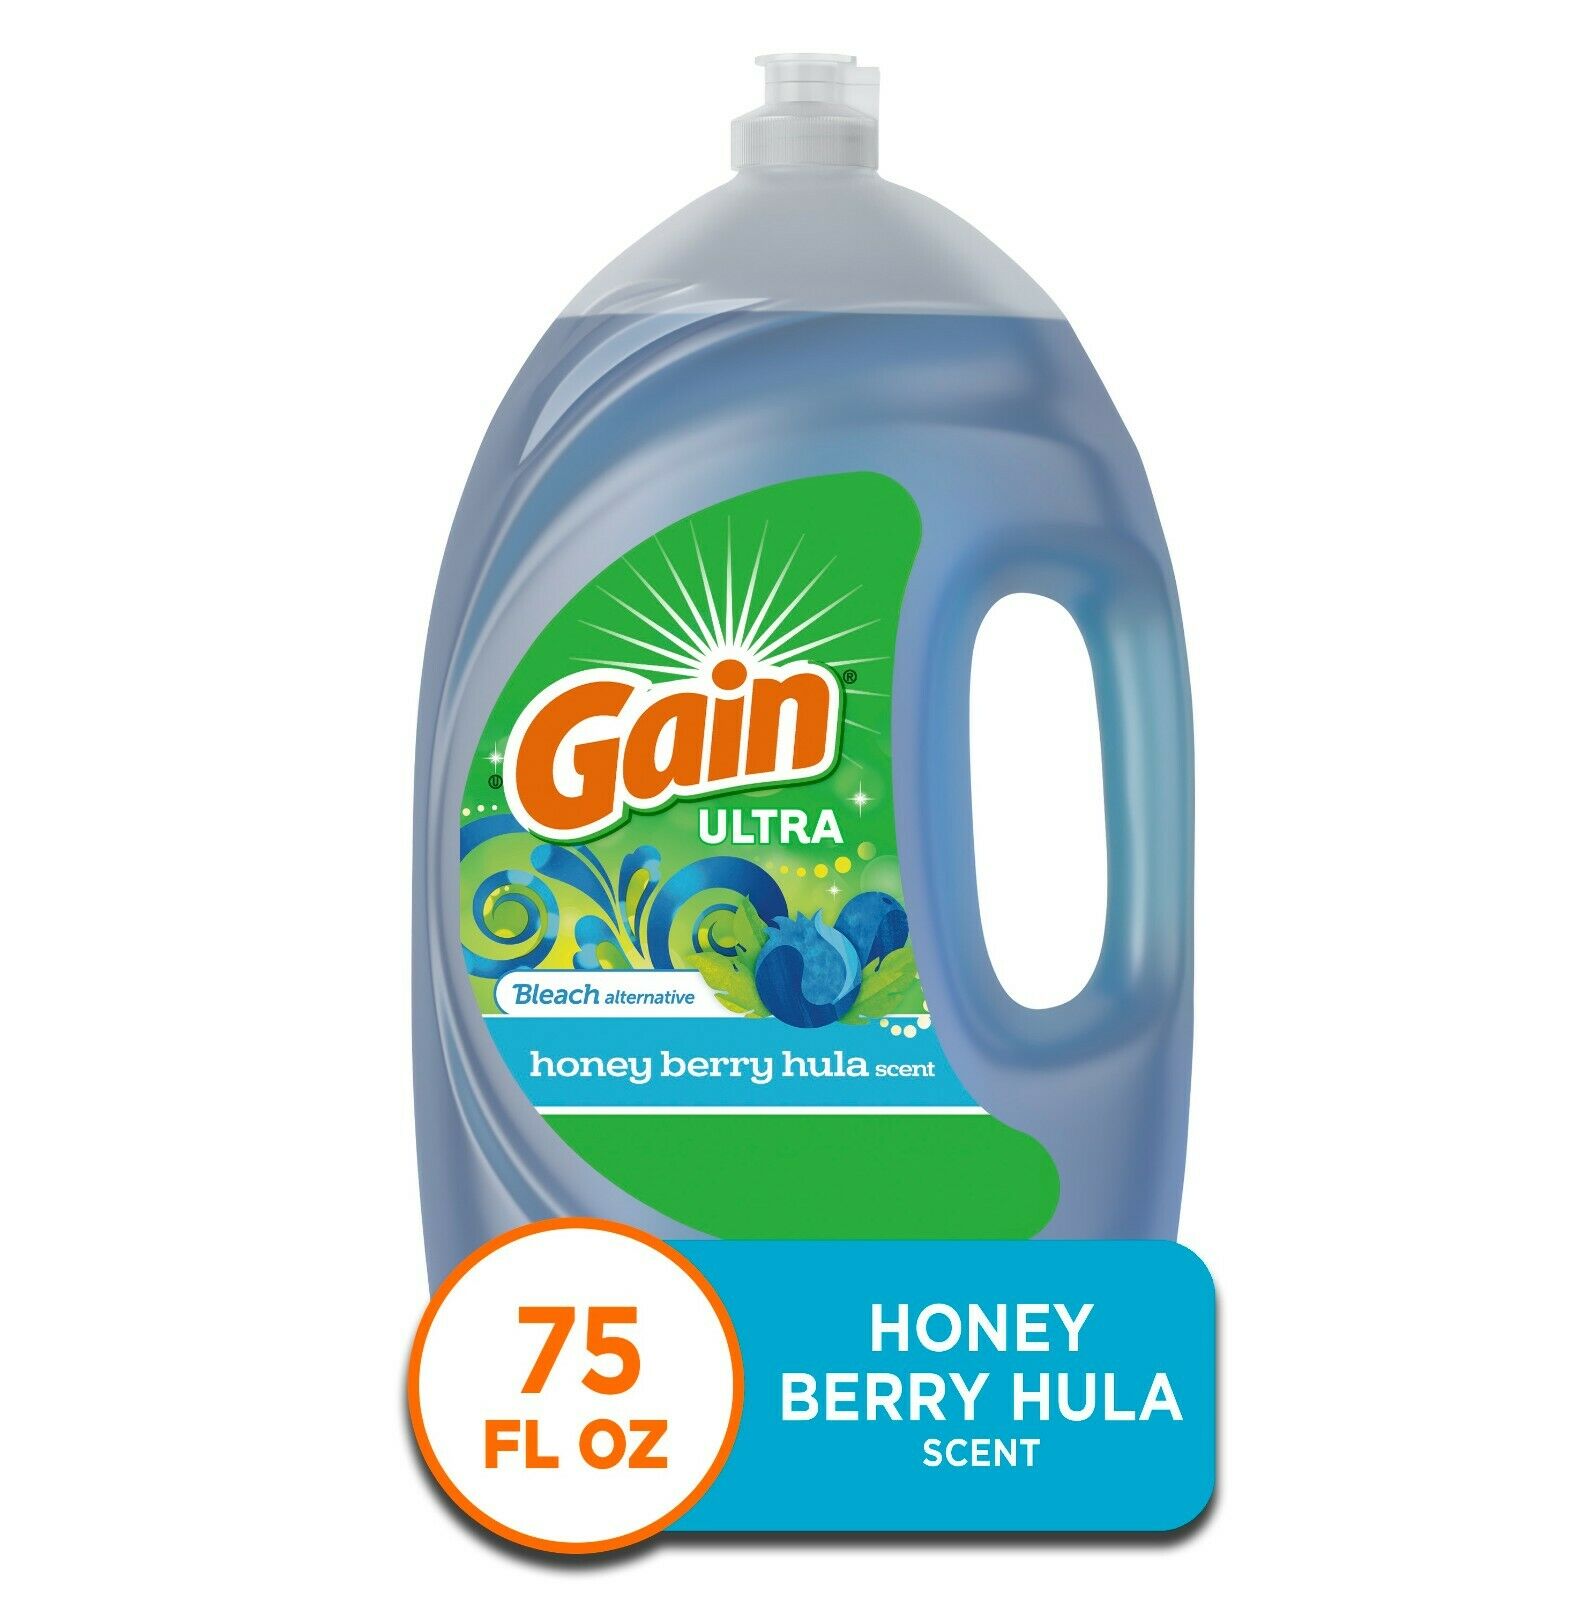 Gain Ultra Dishwashing Liquid Dish Soap, Honeyberry Hula Scent, 75 fl oz